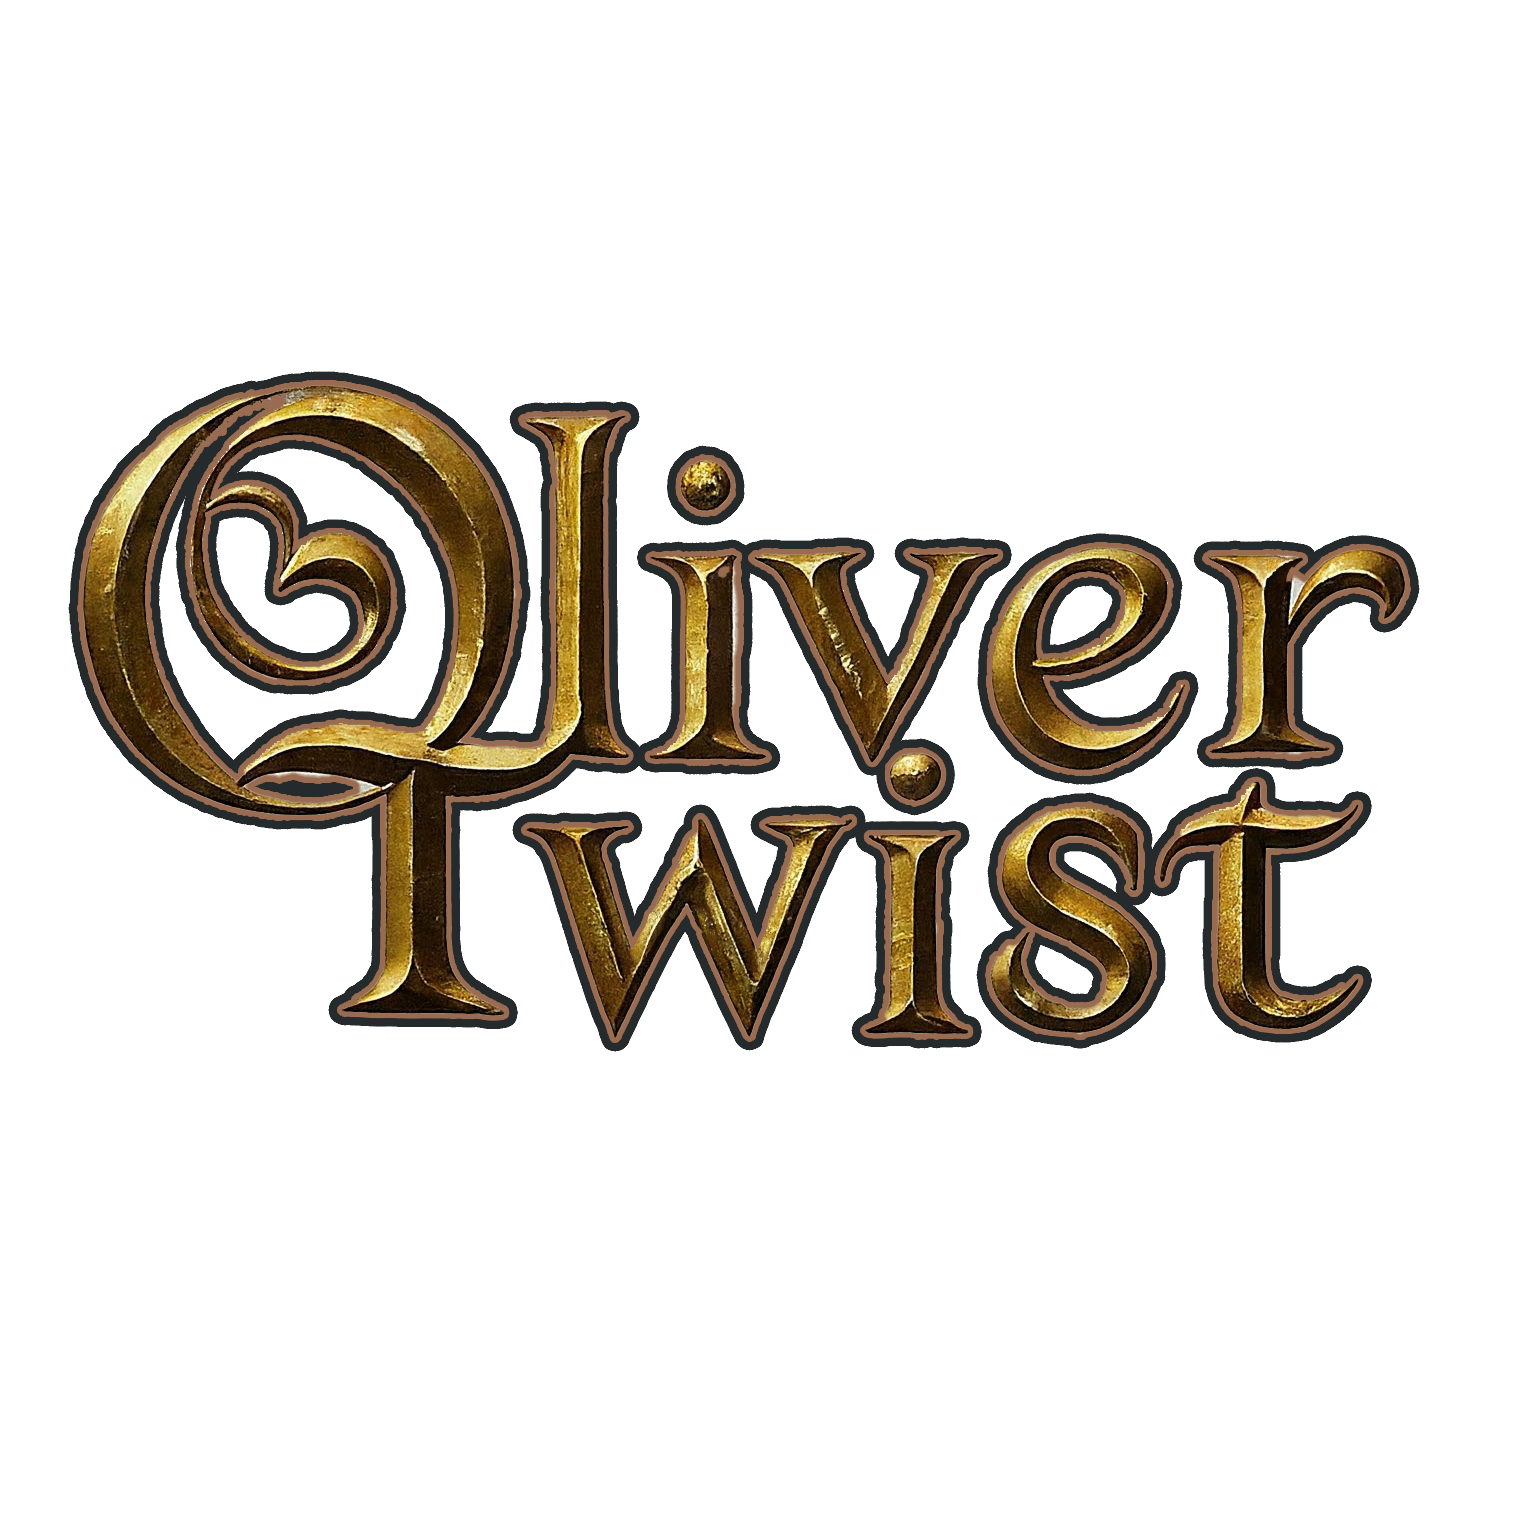 Oliver Twist logo